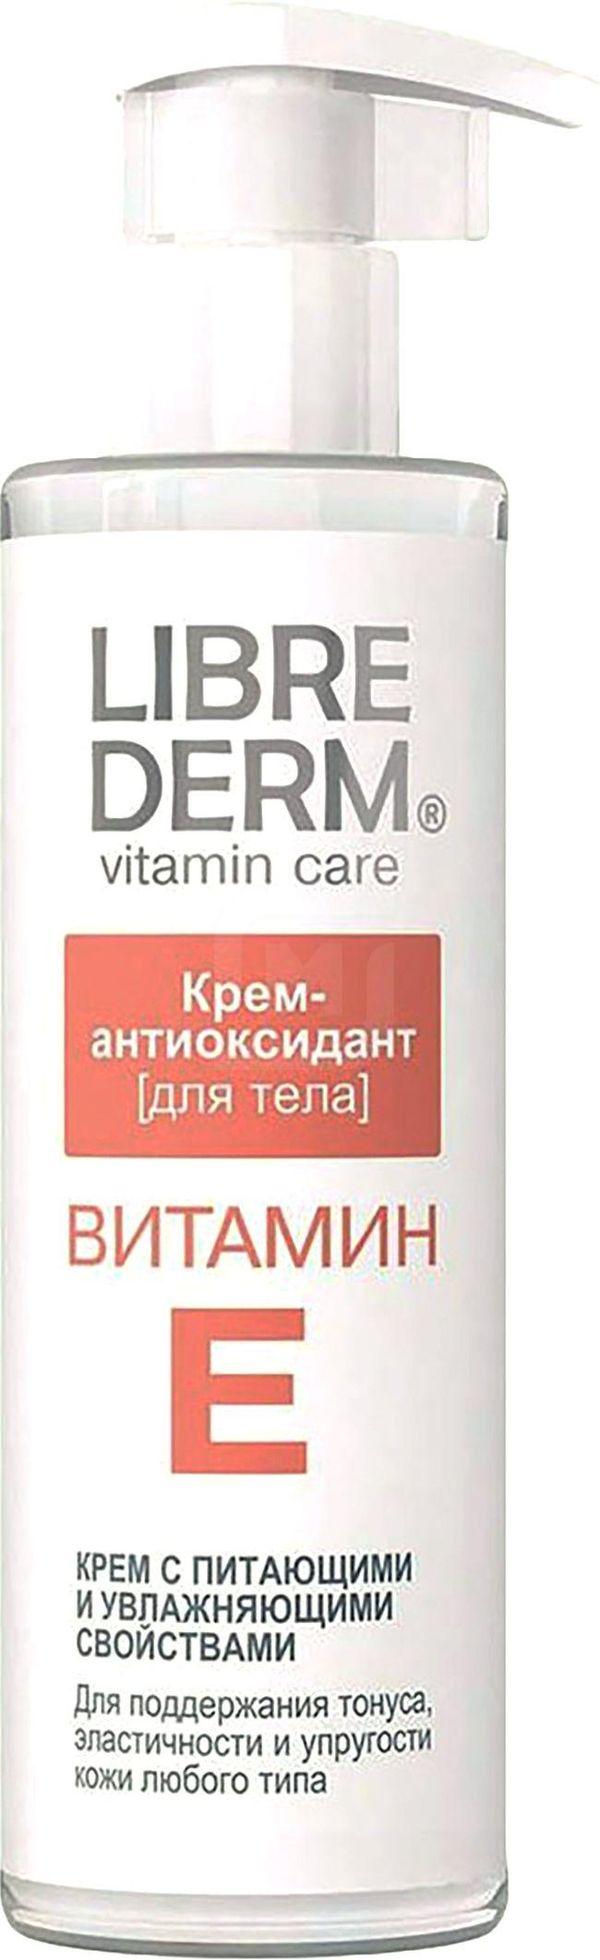 Крем-антиоксидант для тела Librederm витамин Е 200мл